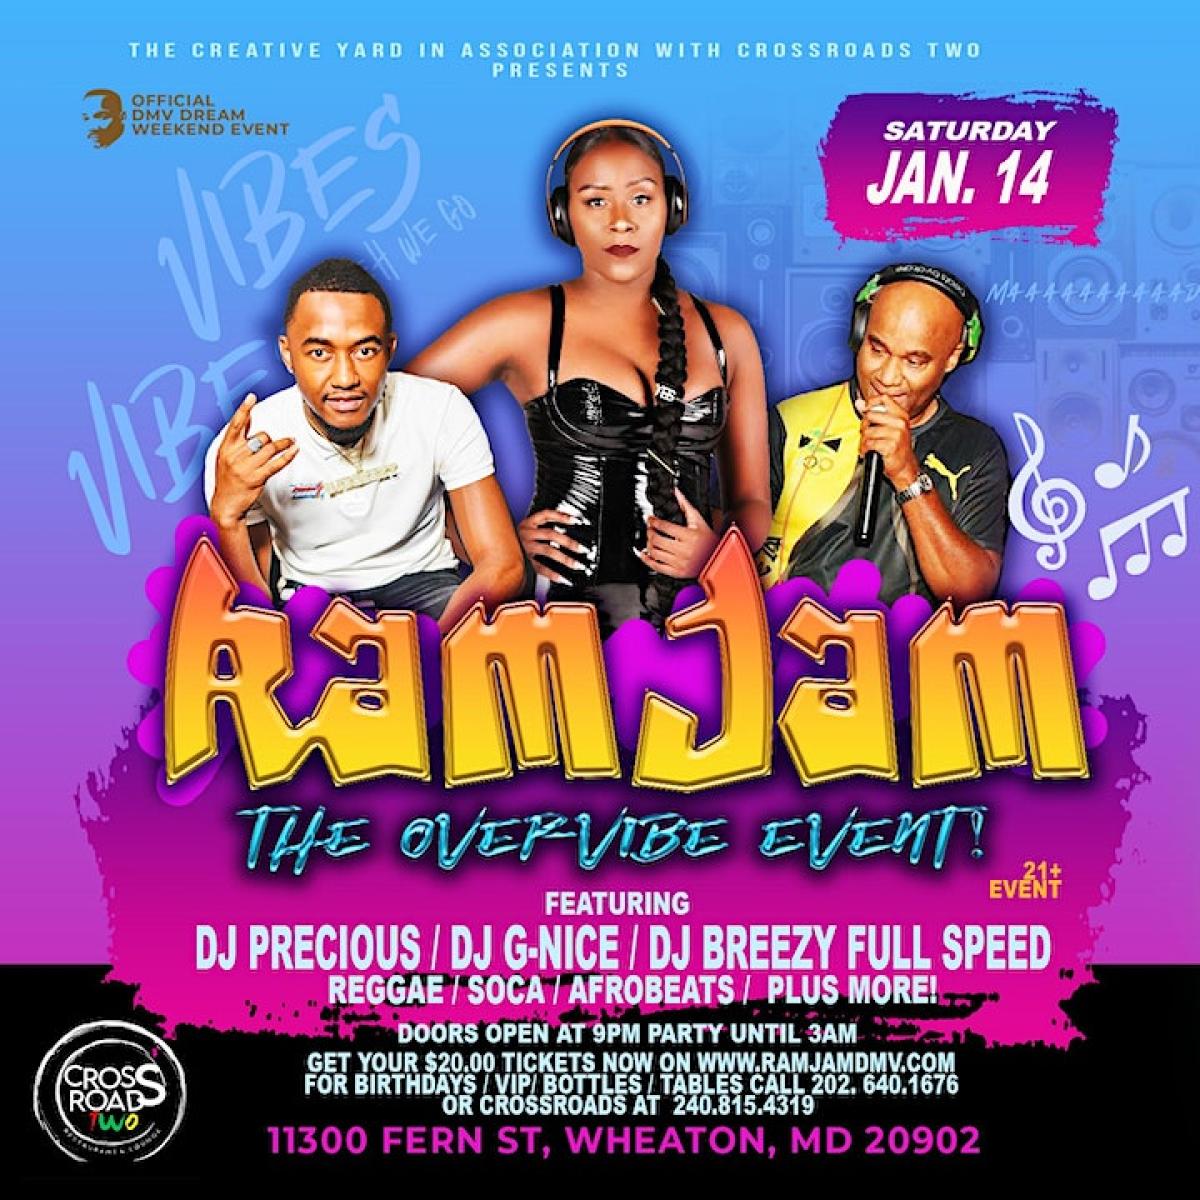 Ram Jam flyer or graphic.